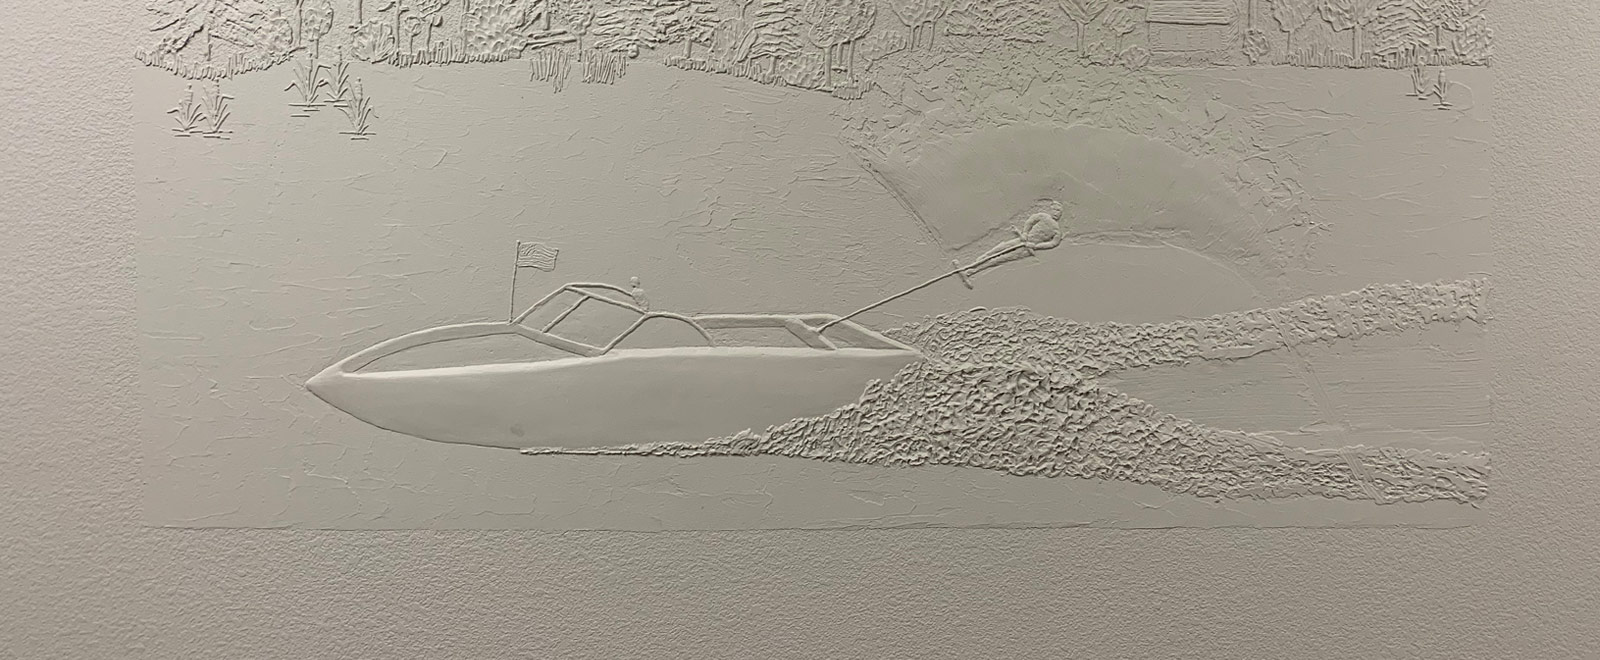 Wall art of boat on lake pulling skier.